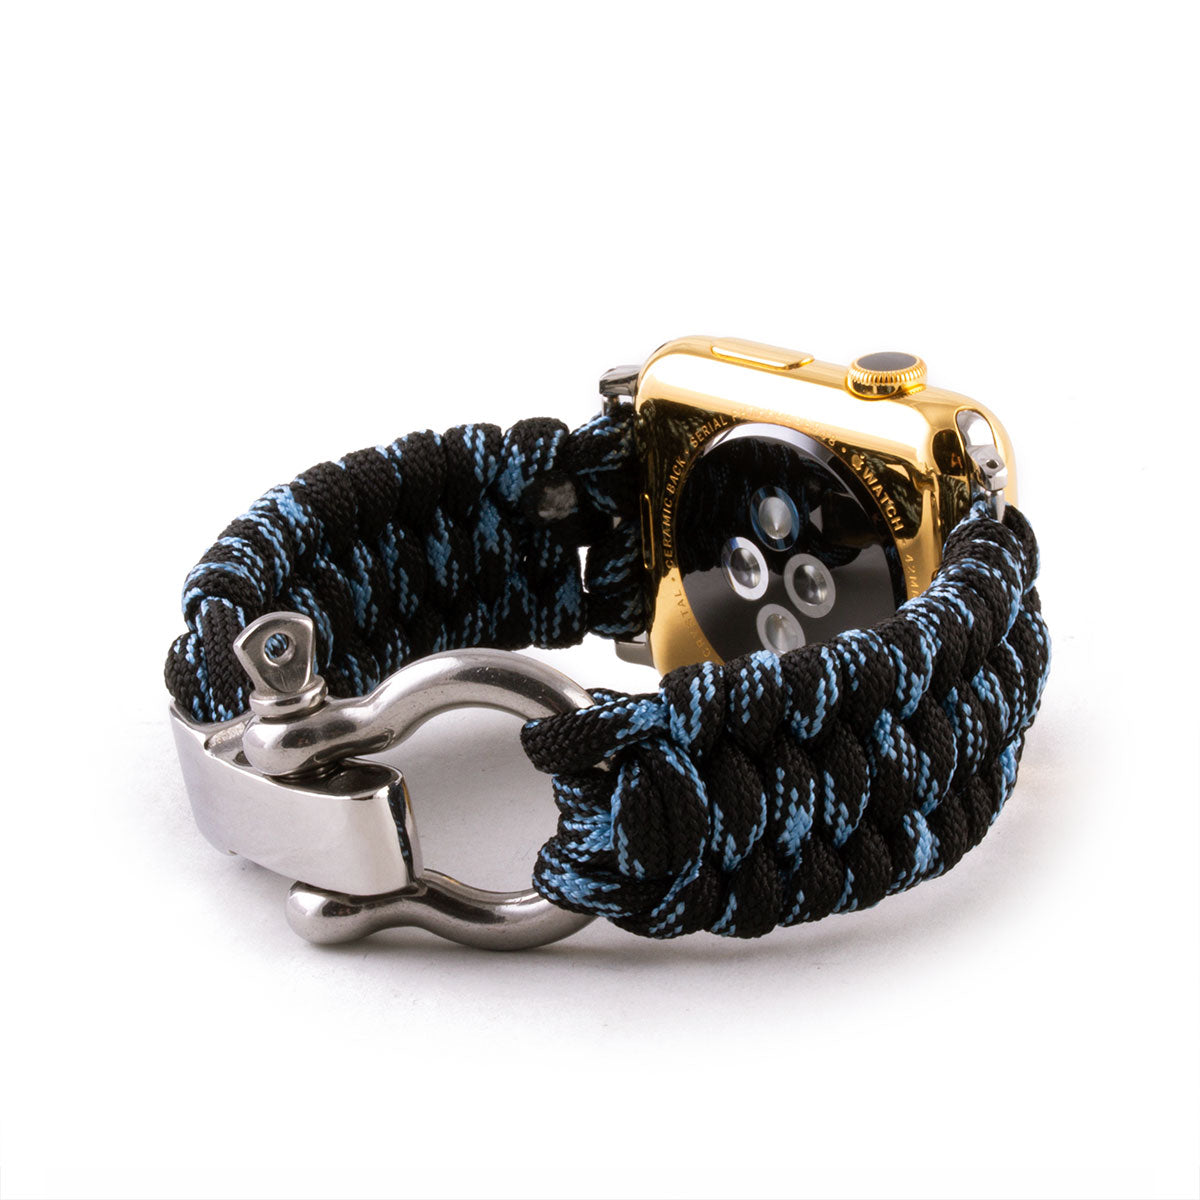 Apple Watch - Bracelet montre tissu - Paracorde (noir, bleu, kaki, camo...)